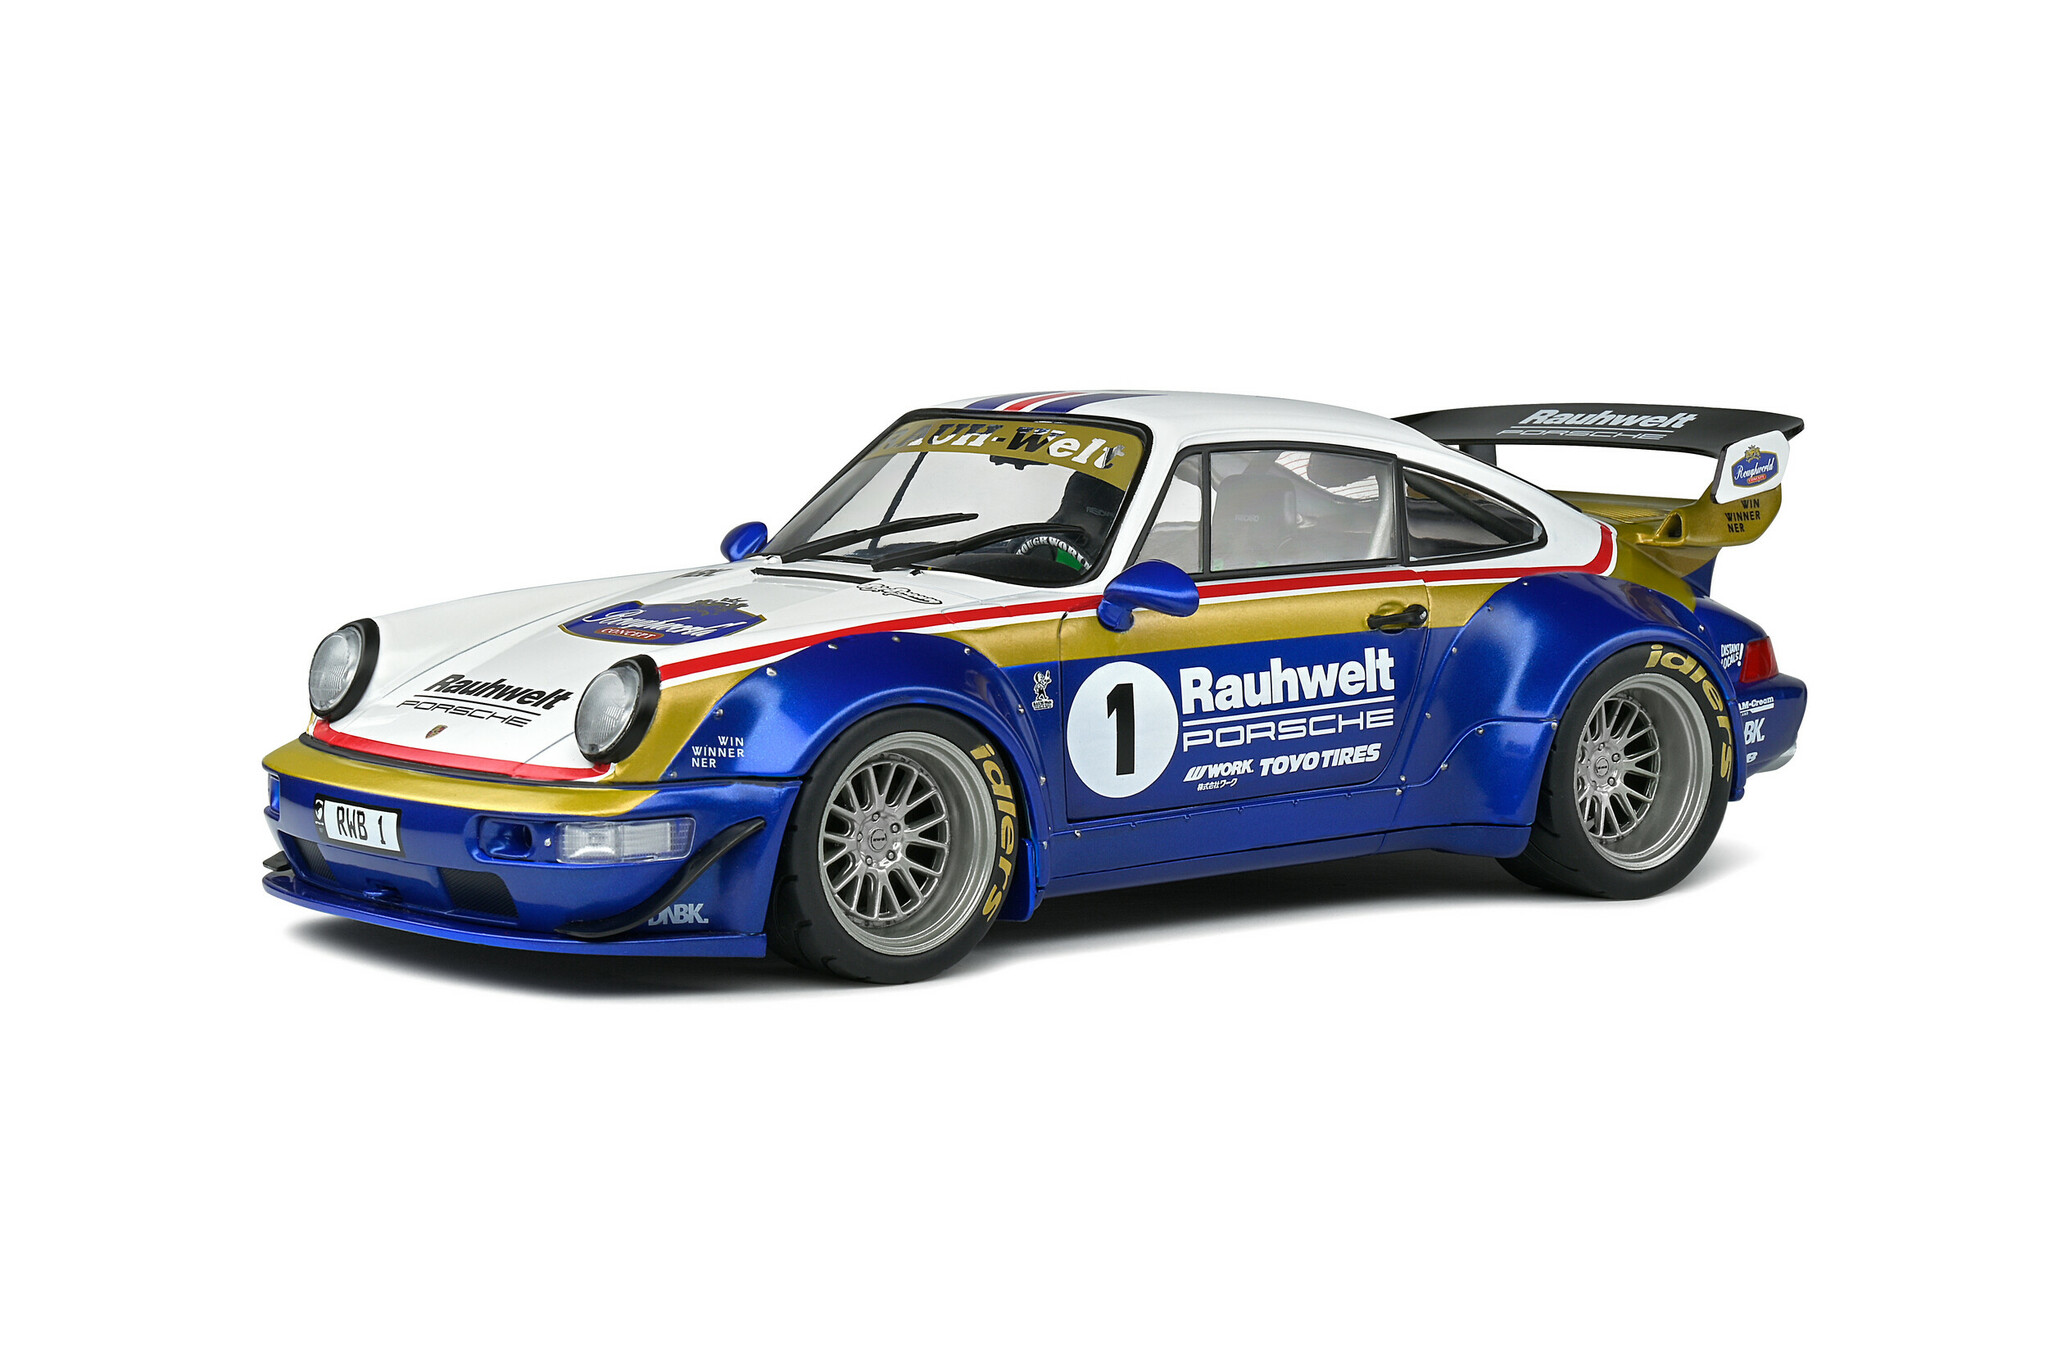 Skala 1/18 (Porsche 911) RWB Bodykit Rauhwelt – 2022' från Solido